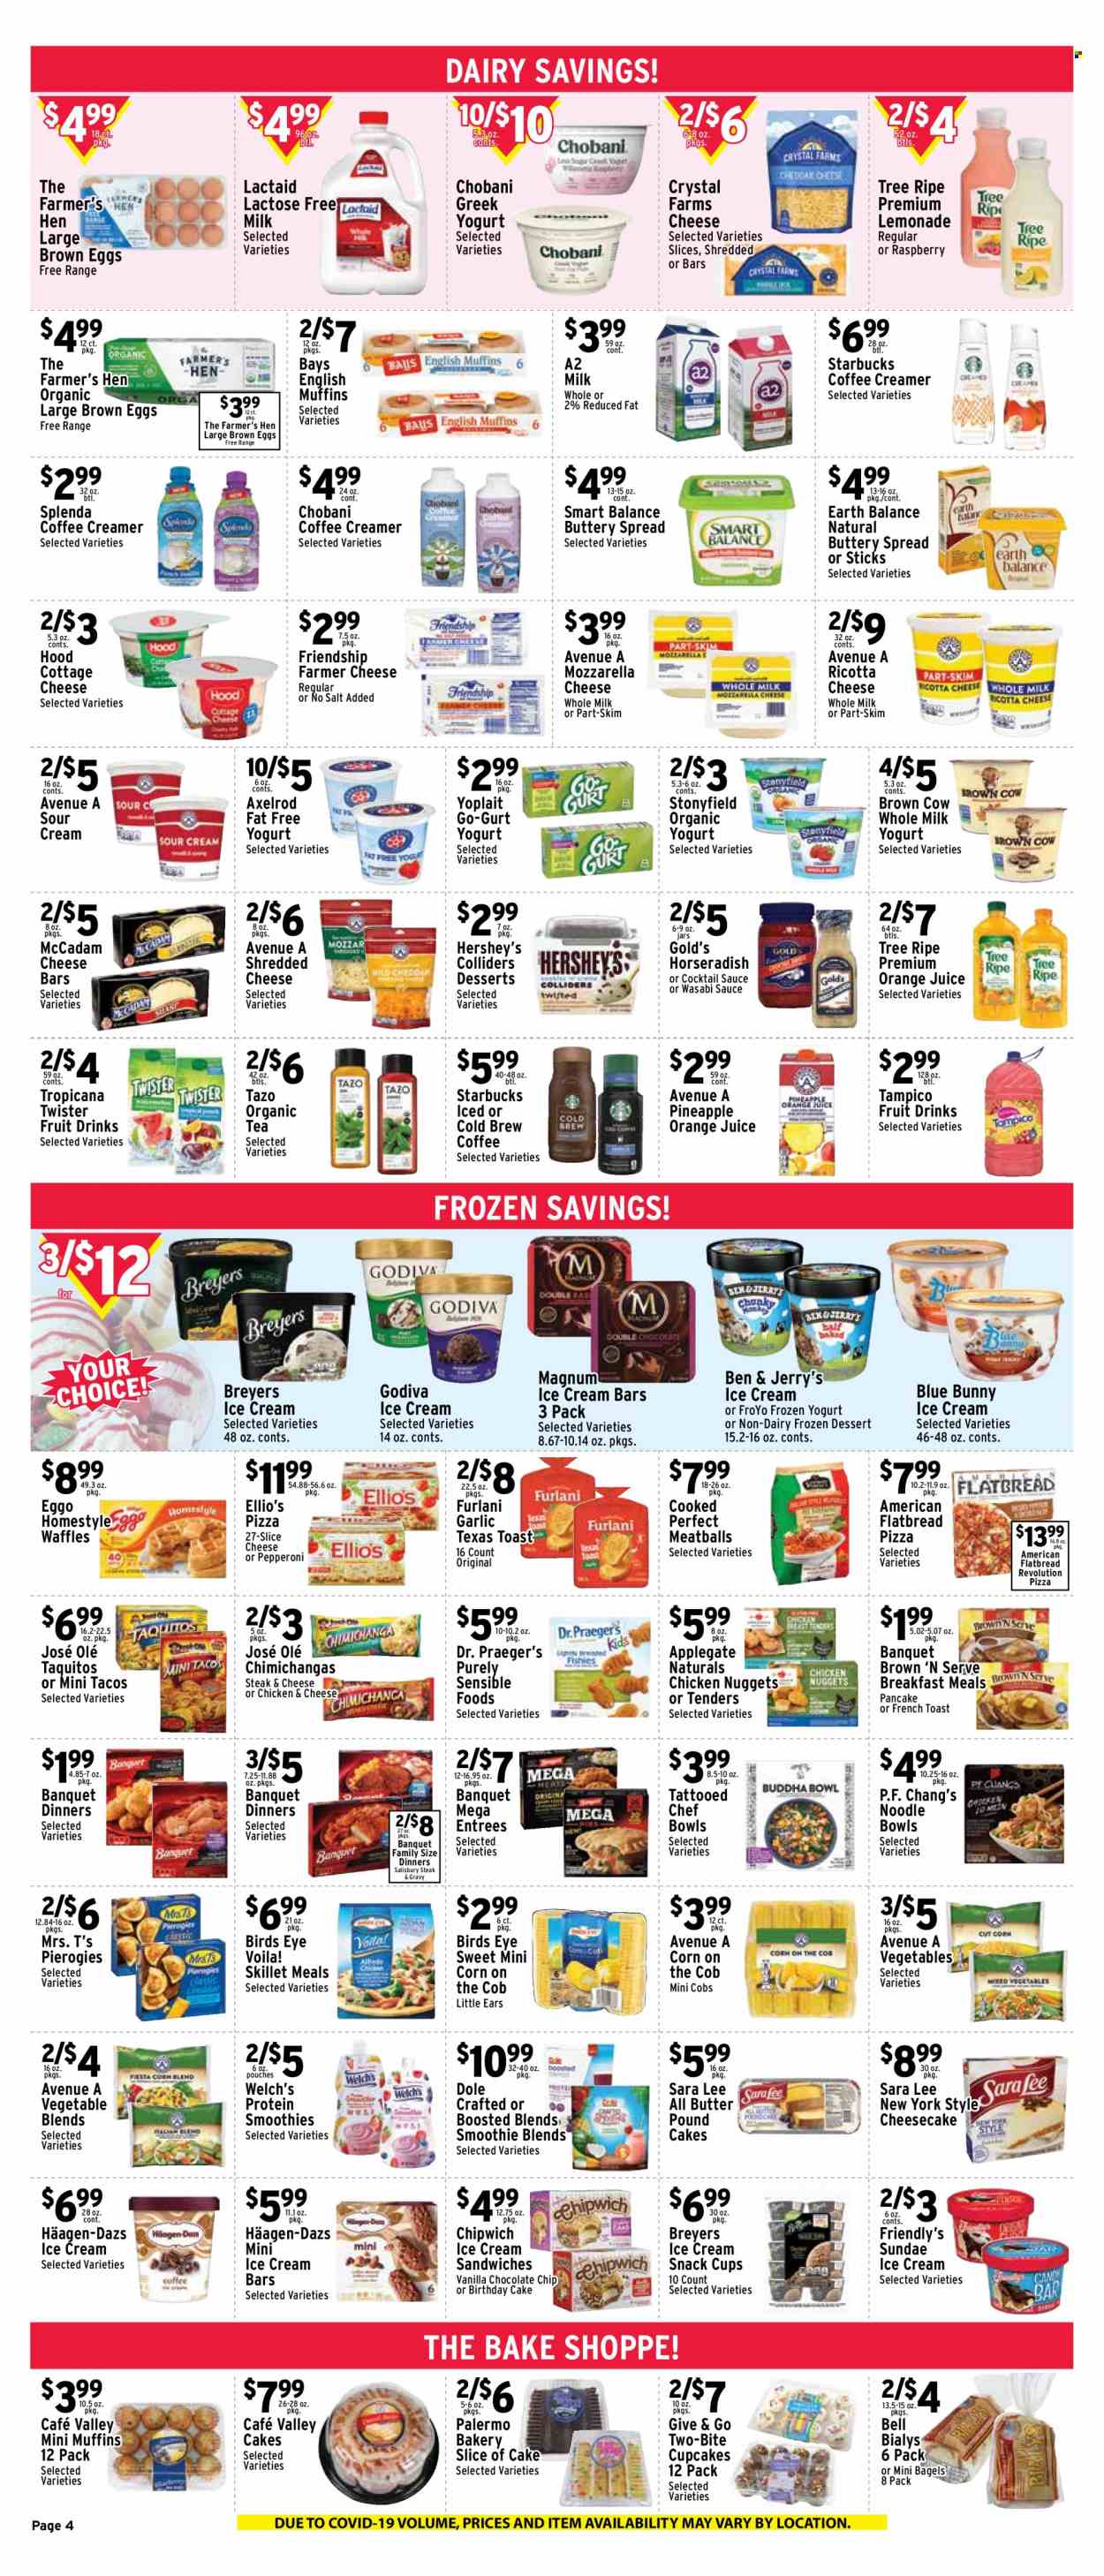 thumbnail - Met Foodmarkets Flyer - 09/25/2022 - 10/01/2022 - Sales products - bagels, english muffins, cake, flatbread, tacos, Sara Lee, cupcake, waffles, corn, garlic, horseradish, Dole, pineapple, Welch's, pizza, meatballs, nuggets, pancakes, chicken nuggets, Bird's Eye, noodles, taquitos, Brown 'N Serve, cottage cheese, farmer cheese, Lactaid, ricotta, shredded cheese, sliced cheese, greek yoghurt, yoghurt, organic yoghurt, Yoplait, Chobani, milk, lactose free milk, eggs, buttery spread, sour cream, creamer, Magnum, ice cream, ice cream bars, ice cream sandwich, Hershey's, Häagen-Dazs, Ben & Jerry's, Friendly's Ice Cream, Blue Bunny, chocolate chips, snack, Godiva, wasabi, cocktail sauce, lemonade, orange juice, juice, Tropicana Twister, fruit punch, smoothie, tea, Starbucks, steak. Page 4.